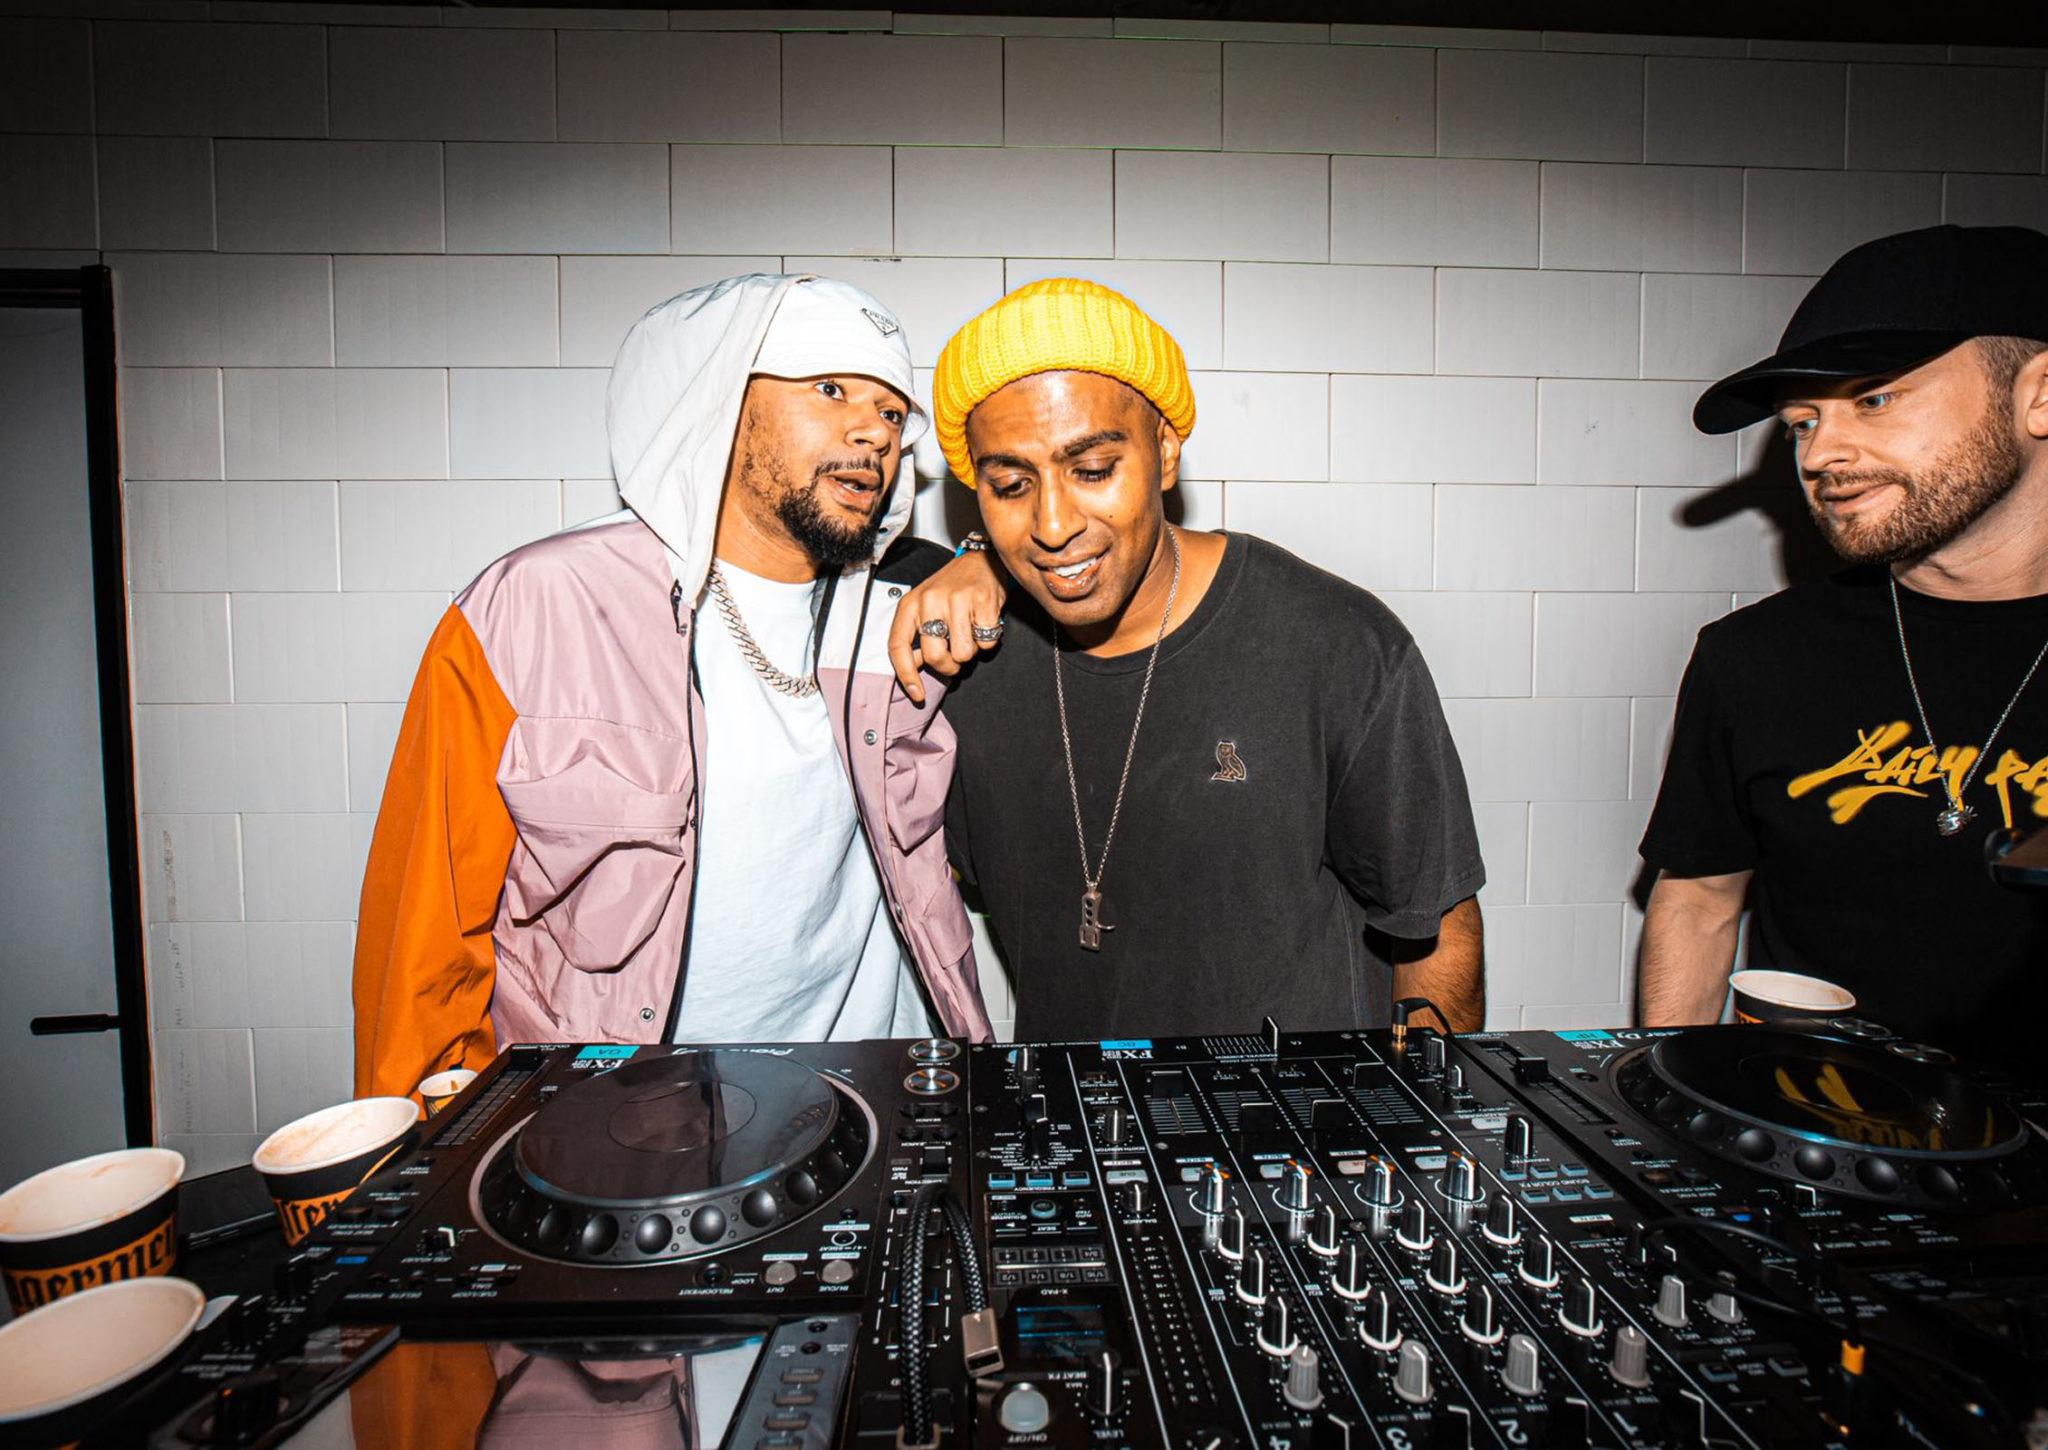 Three men behind DJ decks at Sook Oxford Street in basement during Jagermeister pop up